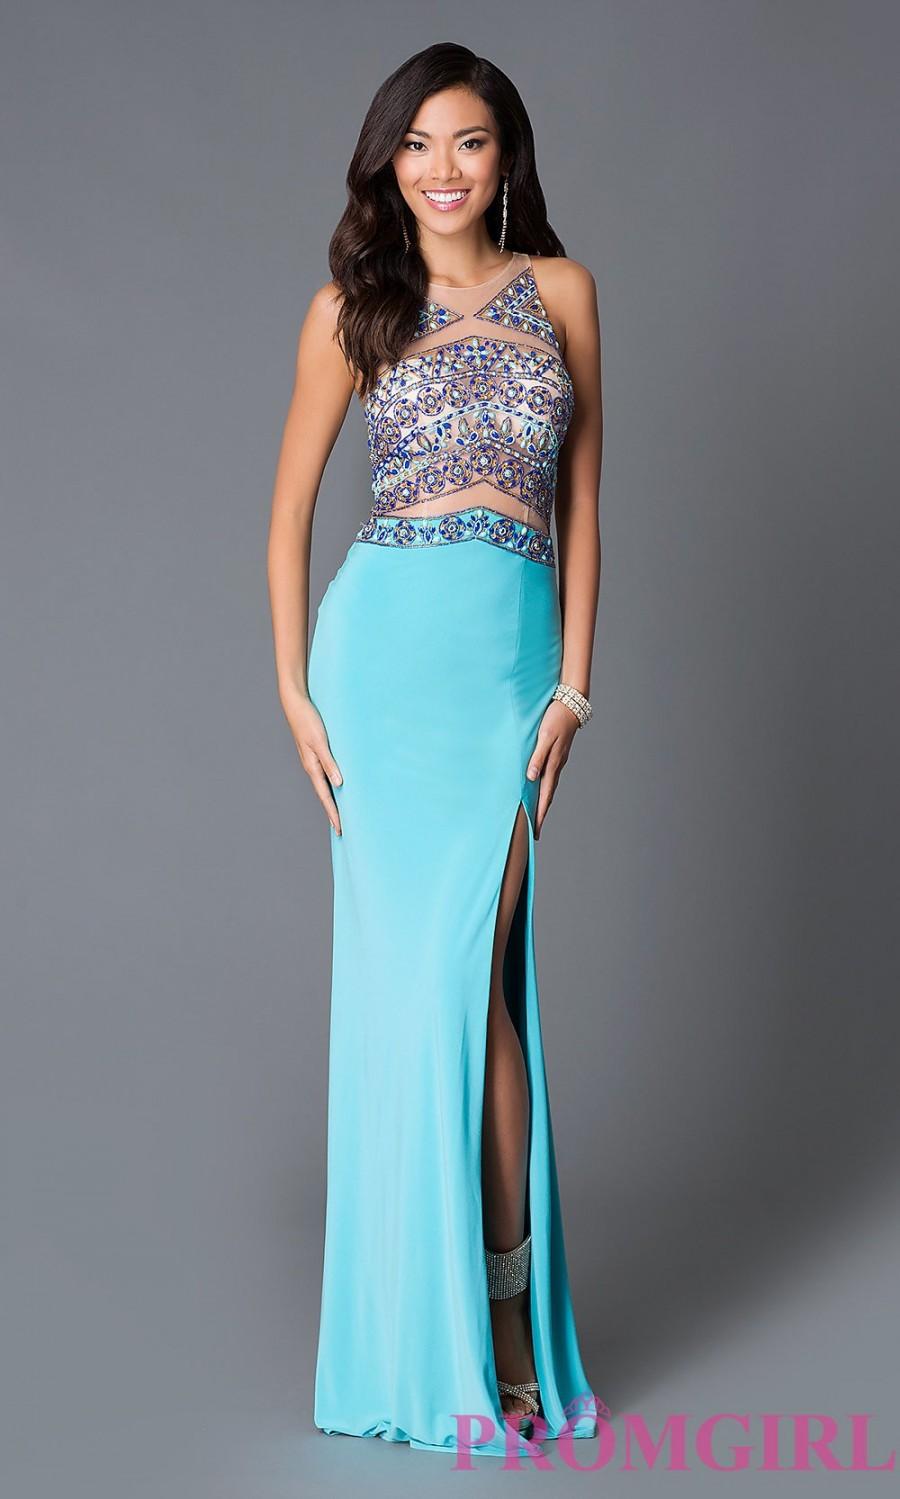 Mariage - Sleeveless Aqua Blue Jersey Prom Dress from JVN by Jovani - Discount Evening Dresses 